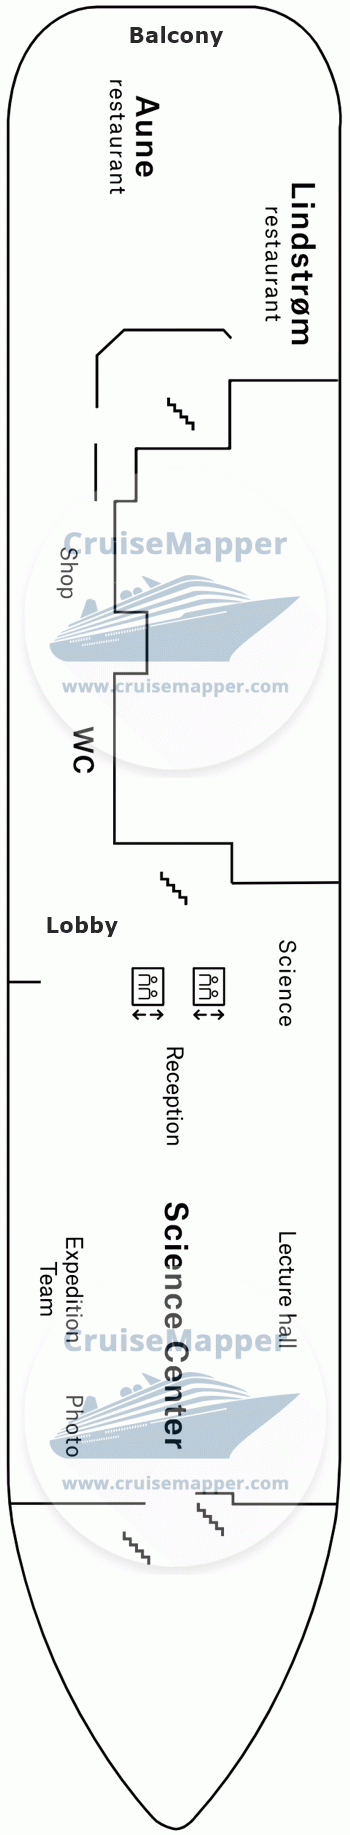 MS Fram Deck 04 - Lobby-Dining-Science Center